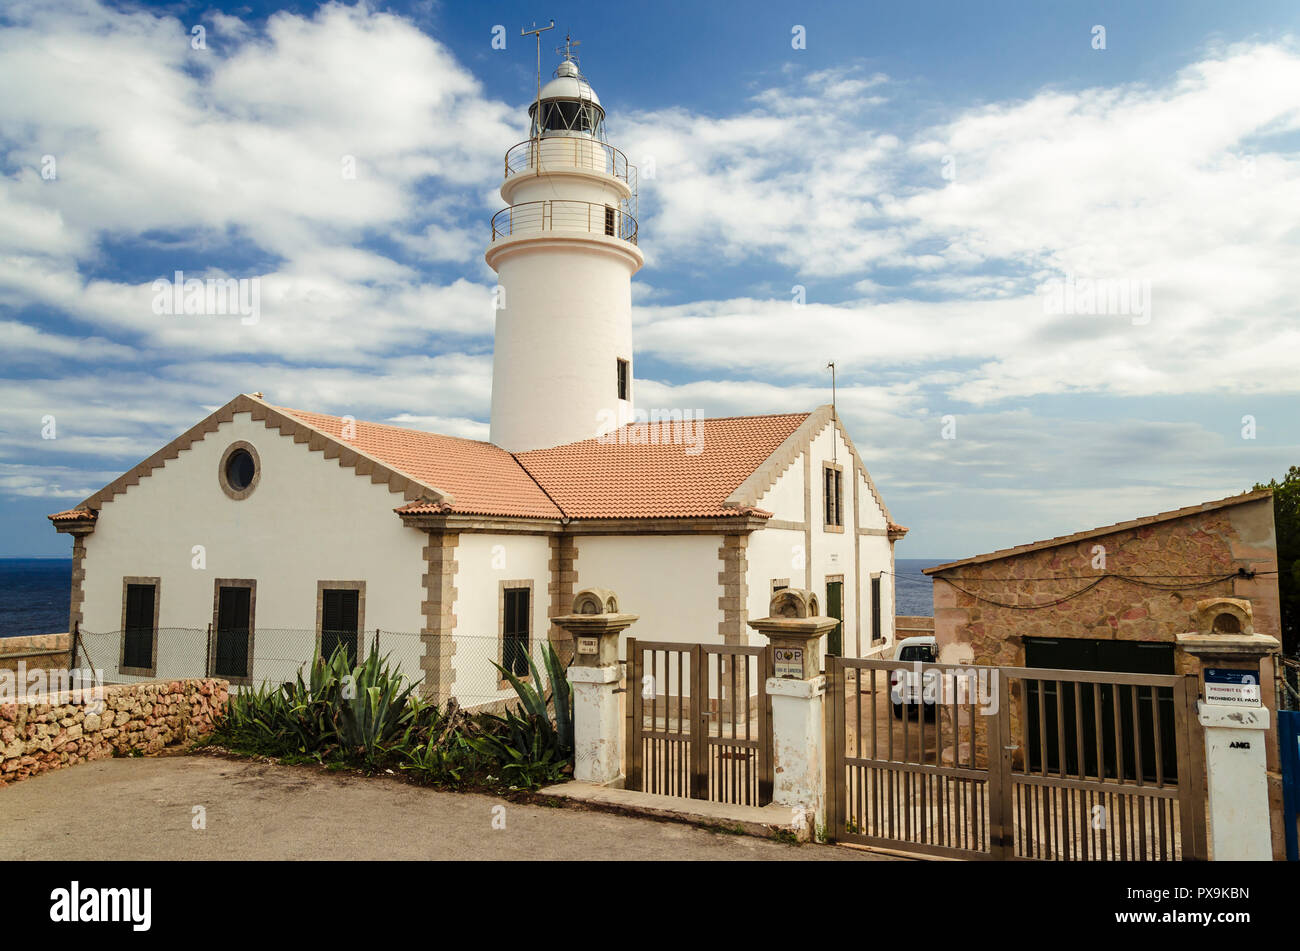 Historical lighthouse on the island of Mallorca, Spain. Stock Photo